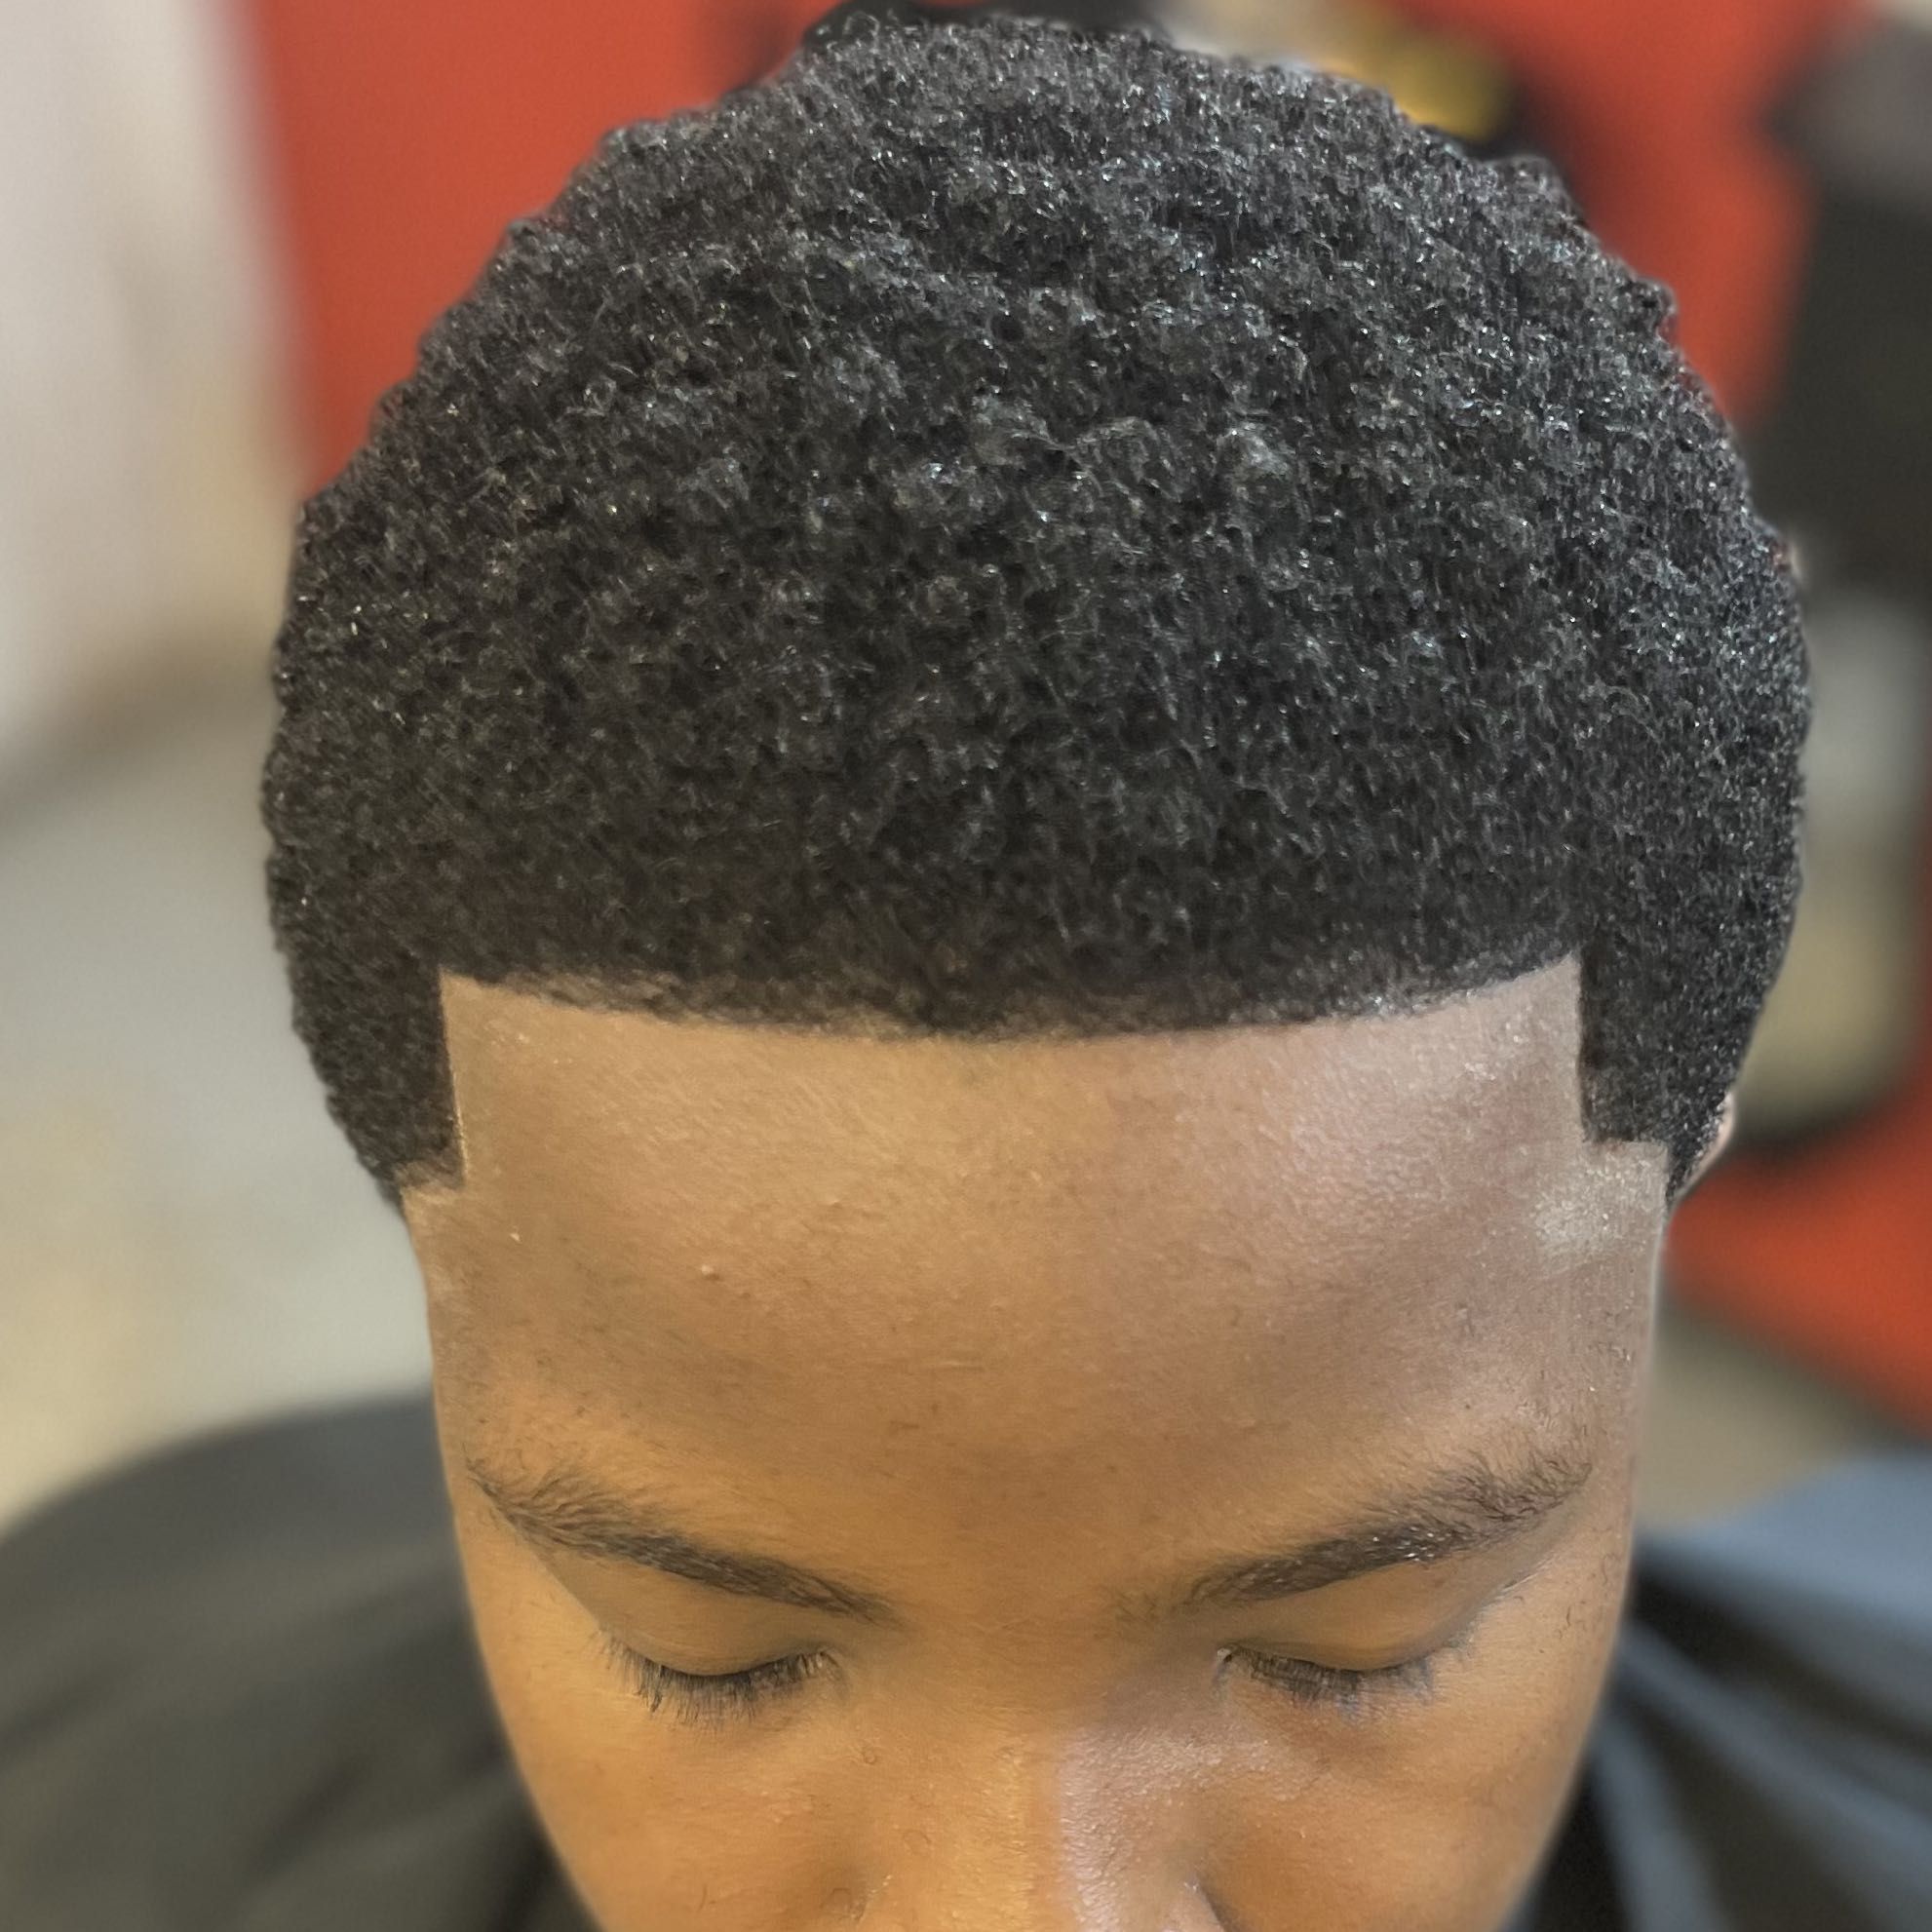 Edge “trimmer “ no hair clipper portfolio